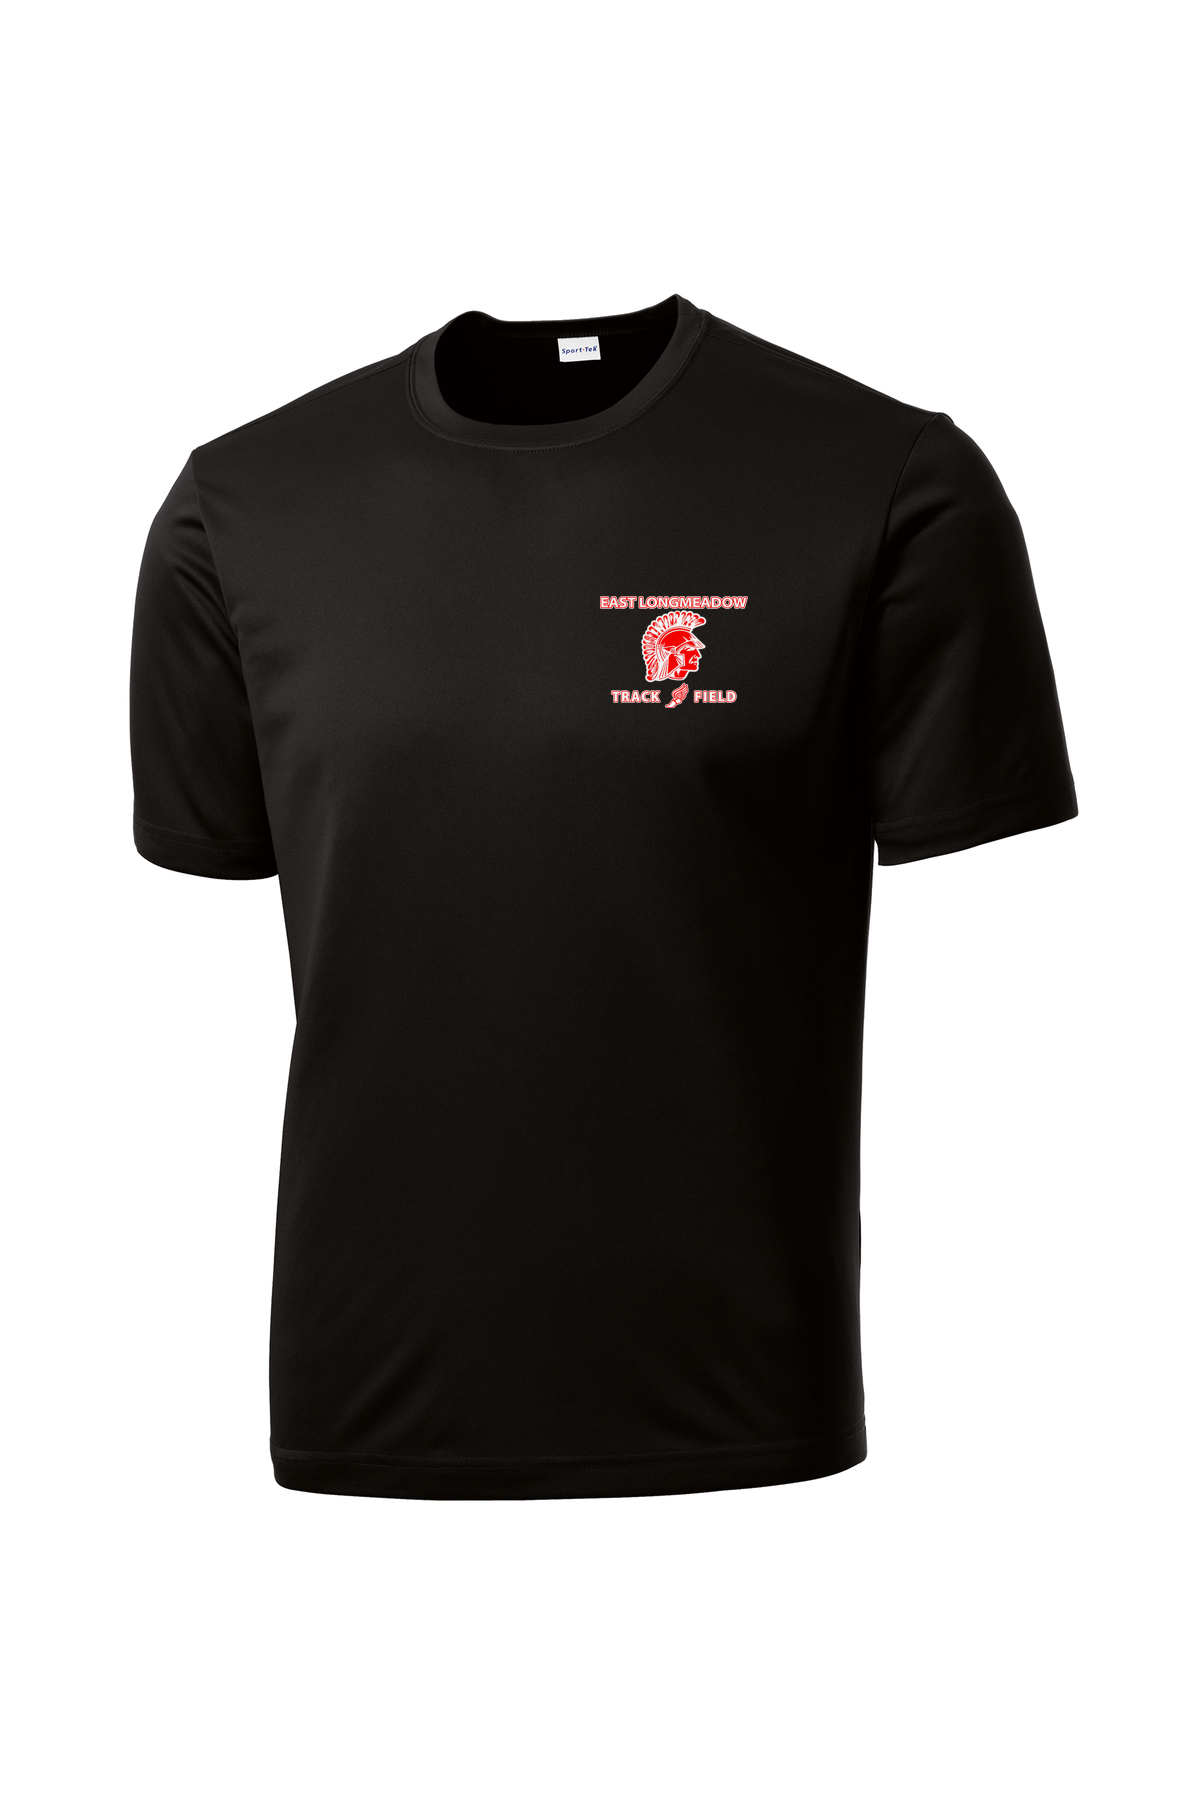 East Longmeadow Track and Field Black Performance T-Shirt